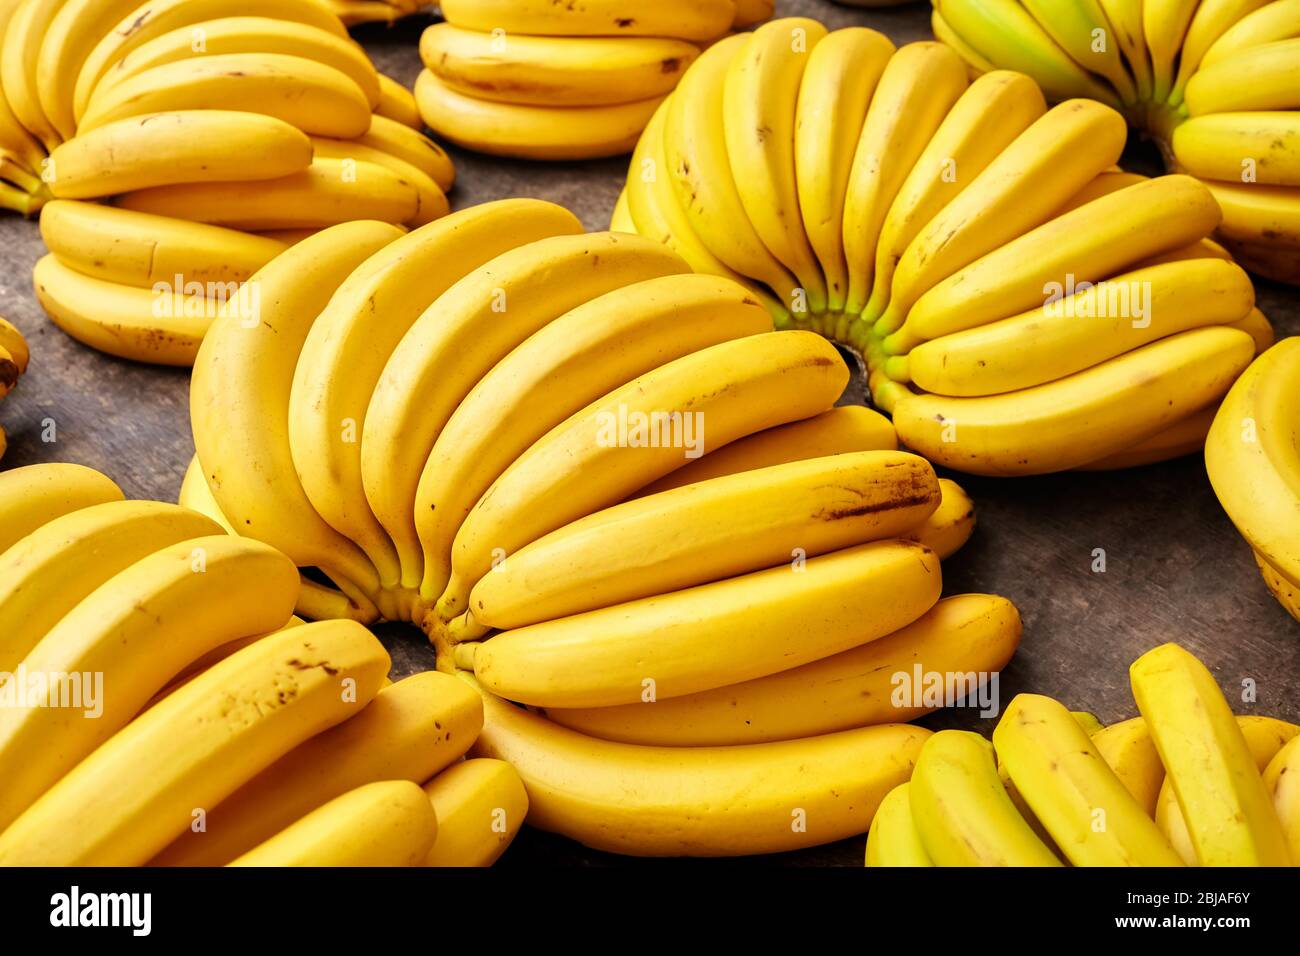 https://c8.alamy.com/comp/2BJAF6Y/natural-ripe-banana-bunches-on-a-local-market-selective-focus-2BJAF6Y.jpg